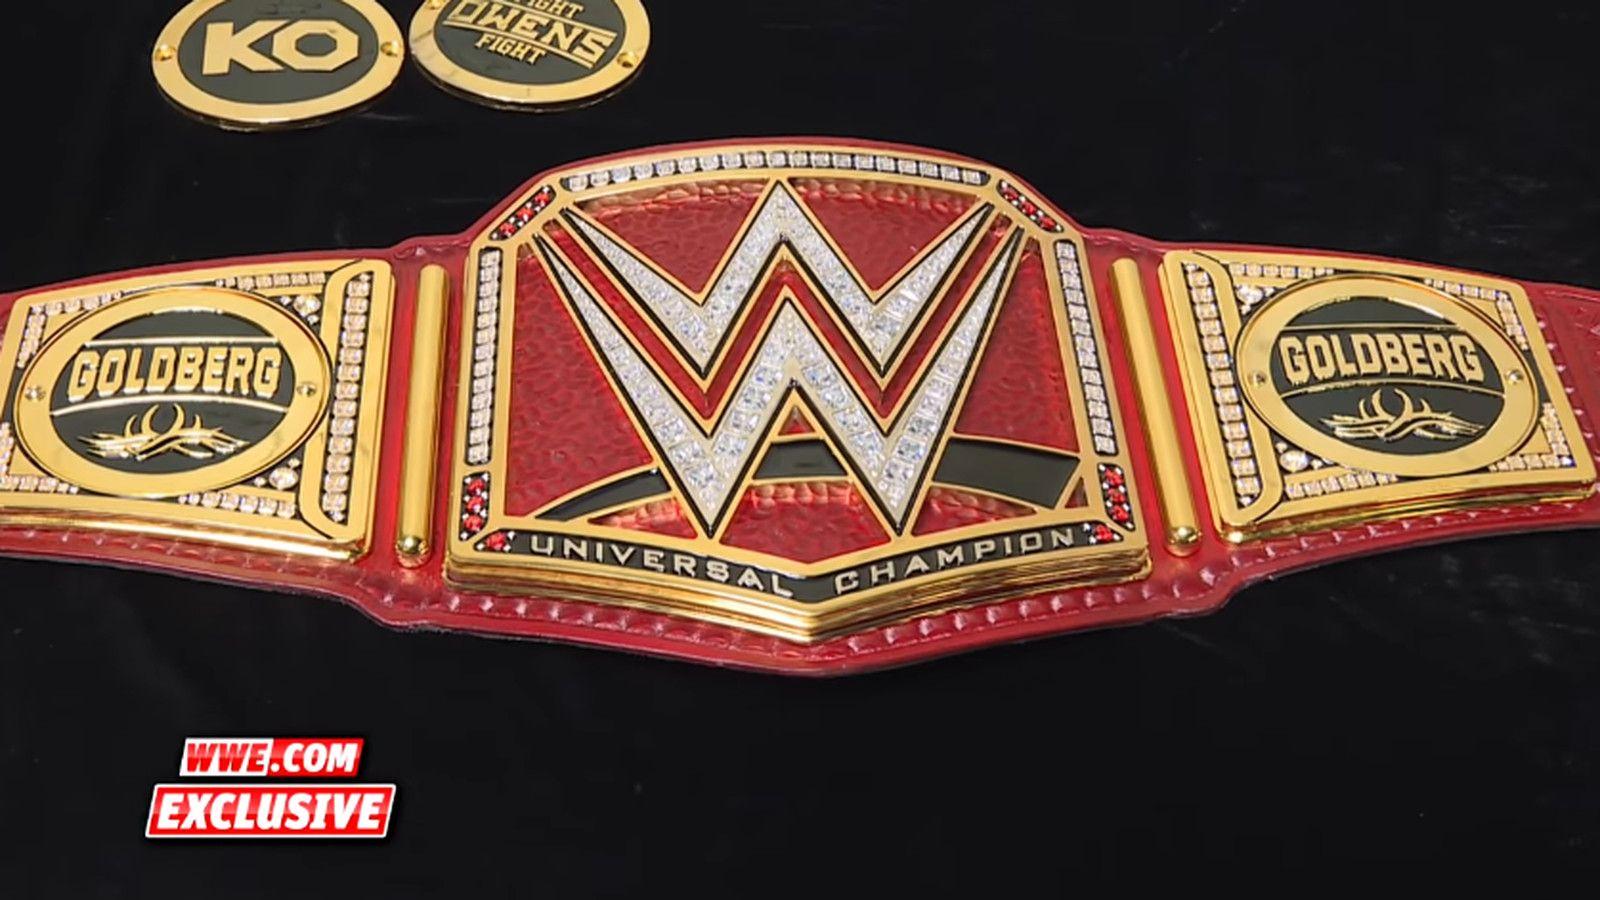 Goldberg gets custom side plates on Universal championship